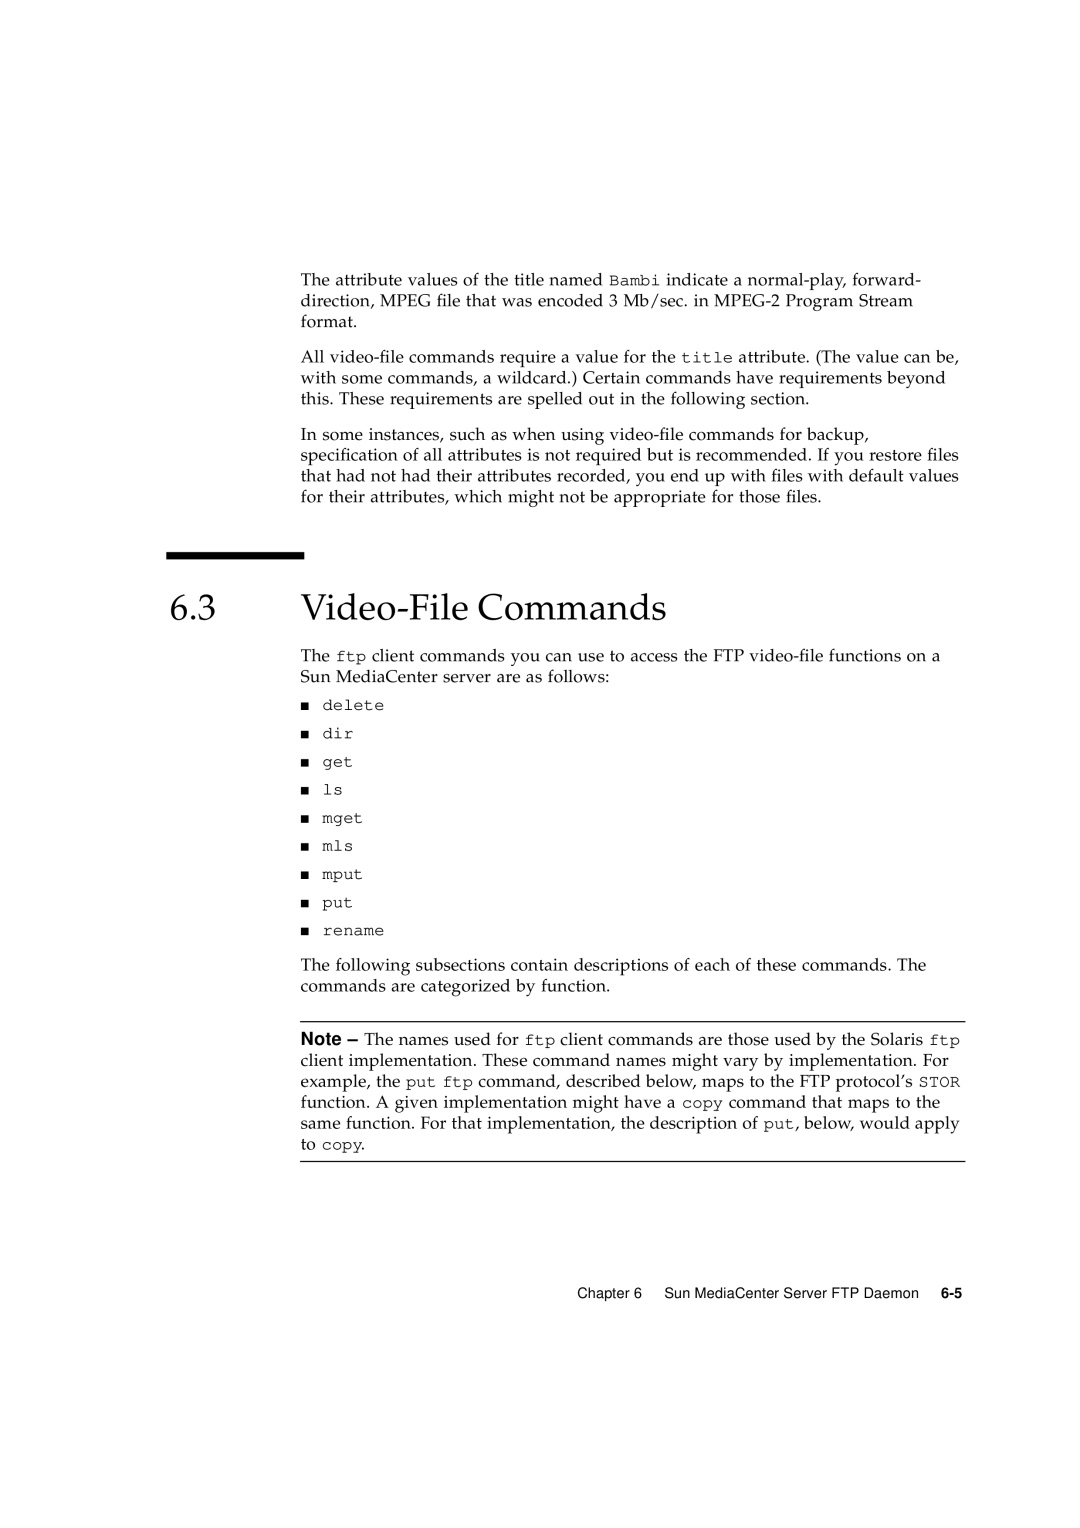 Sun Microsystems 2.1 manual Video-File Commands, delete dir get ls mget mls mput put rename 